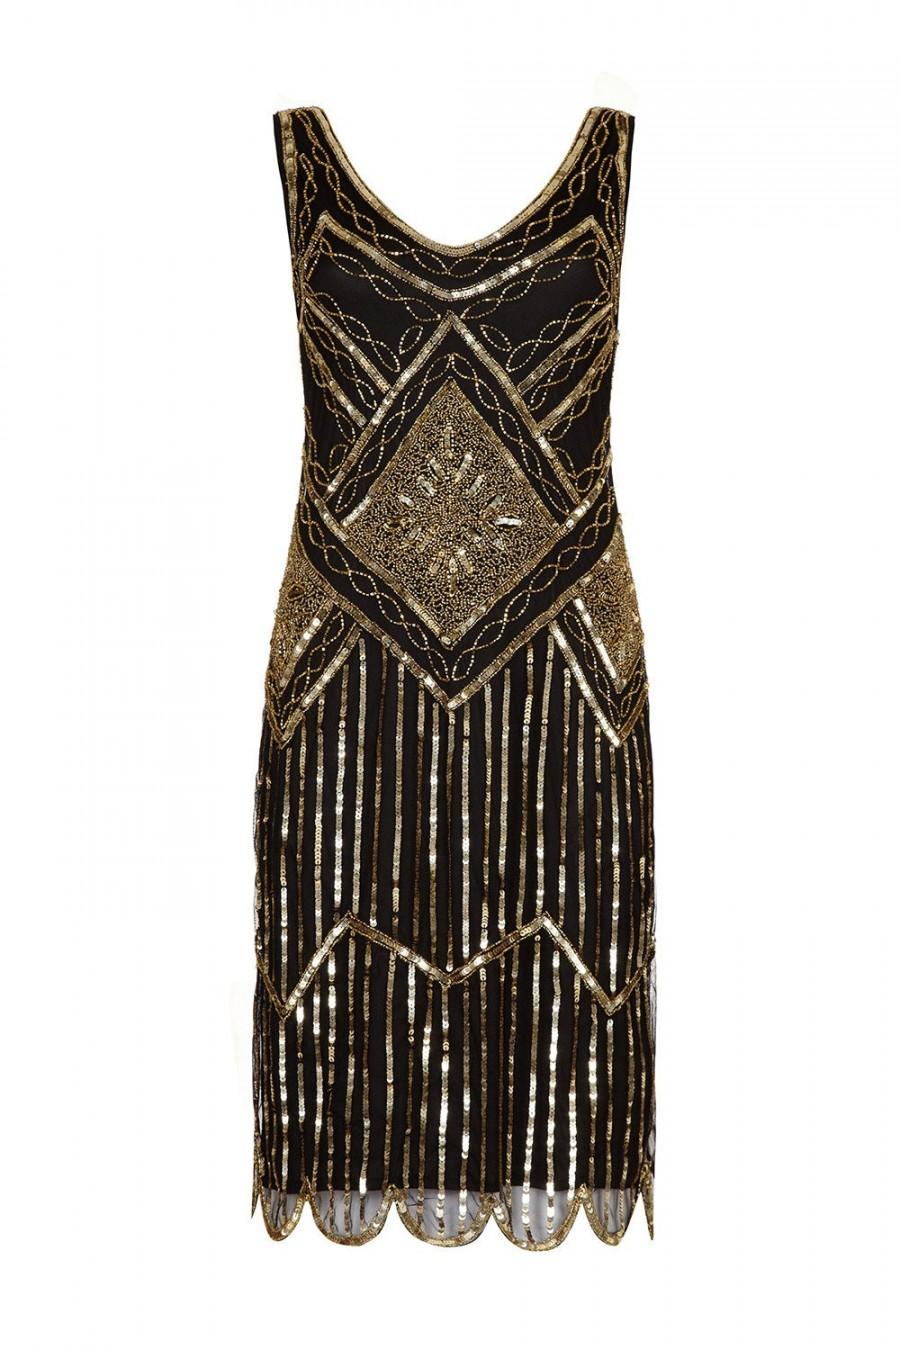 Hochzeit - PETITE Length UK20 US16 AUS20 Black Gold Vintage inspired 1920s Flapper Great Gatsby Charleston Sequin Downton Abbey Wedding Dress Hand Made